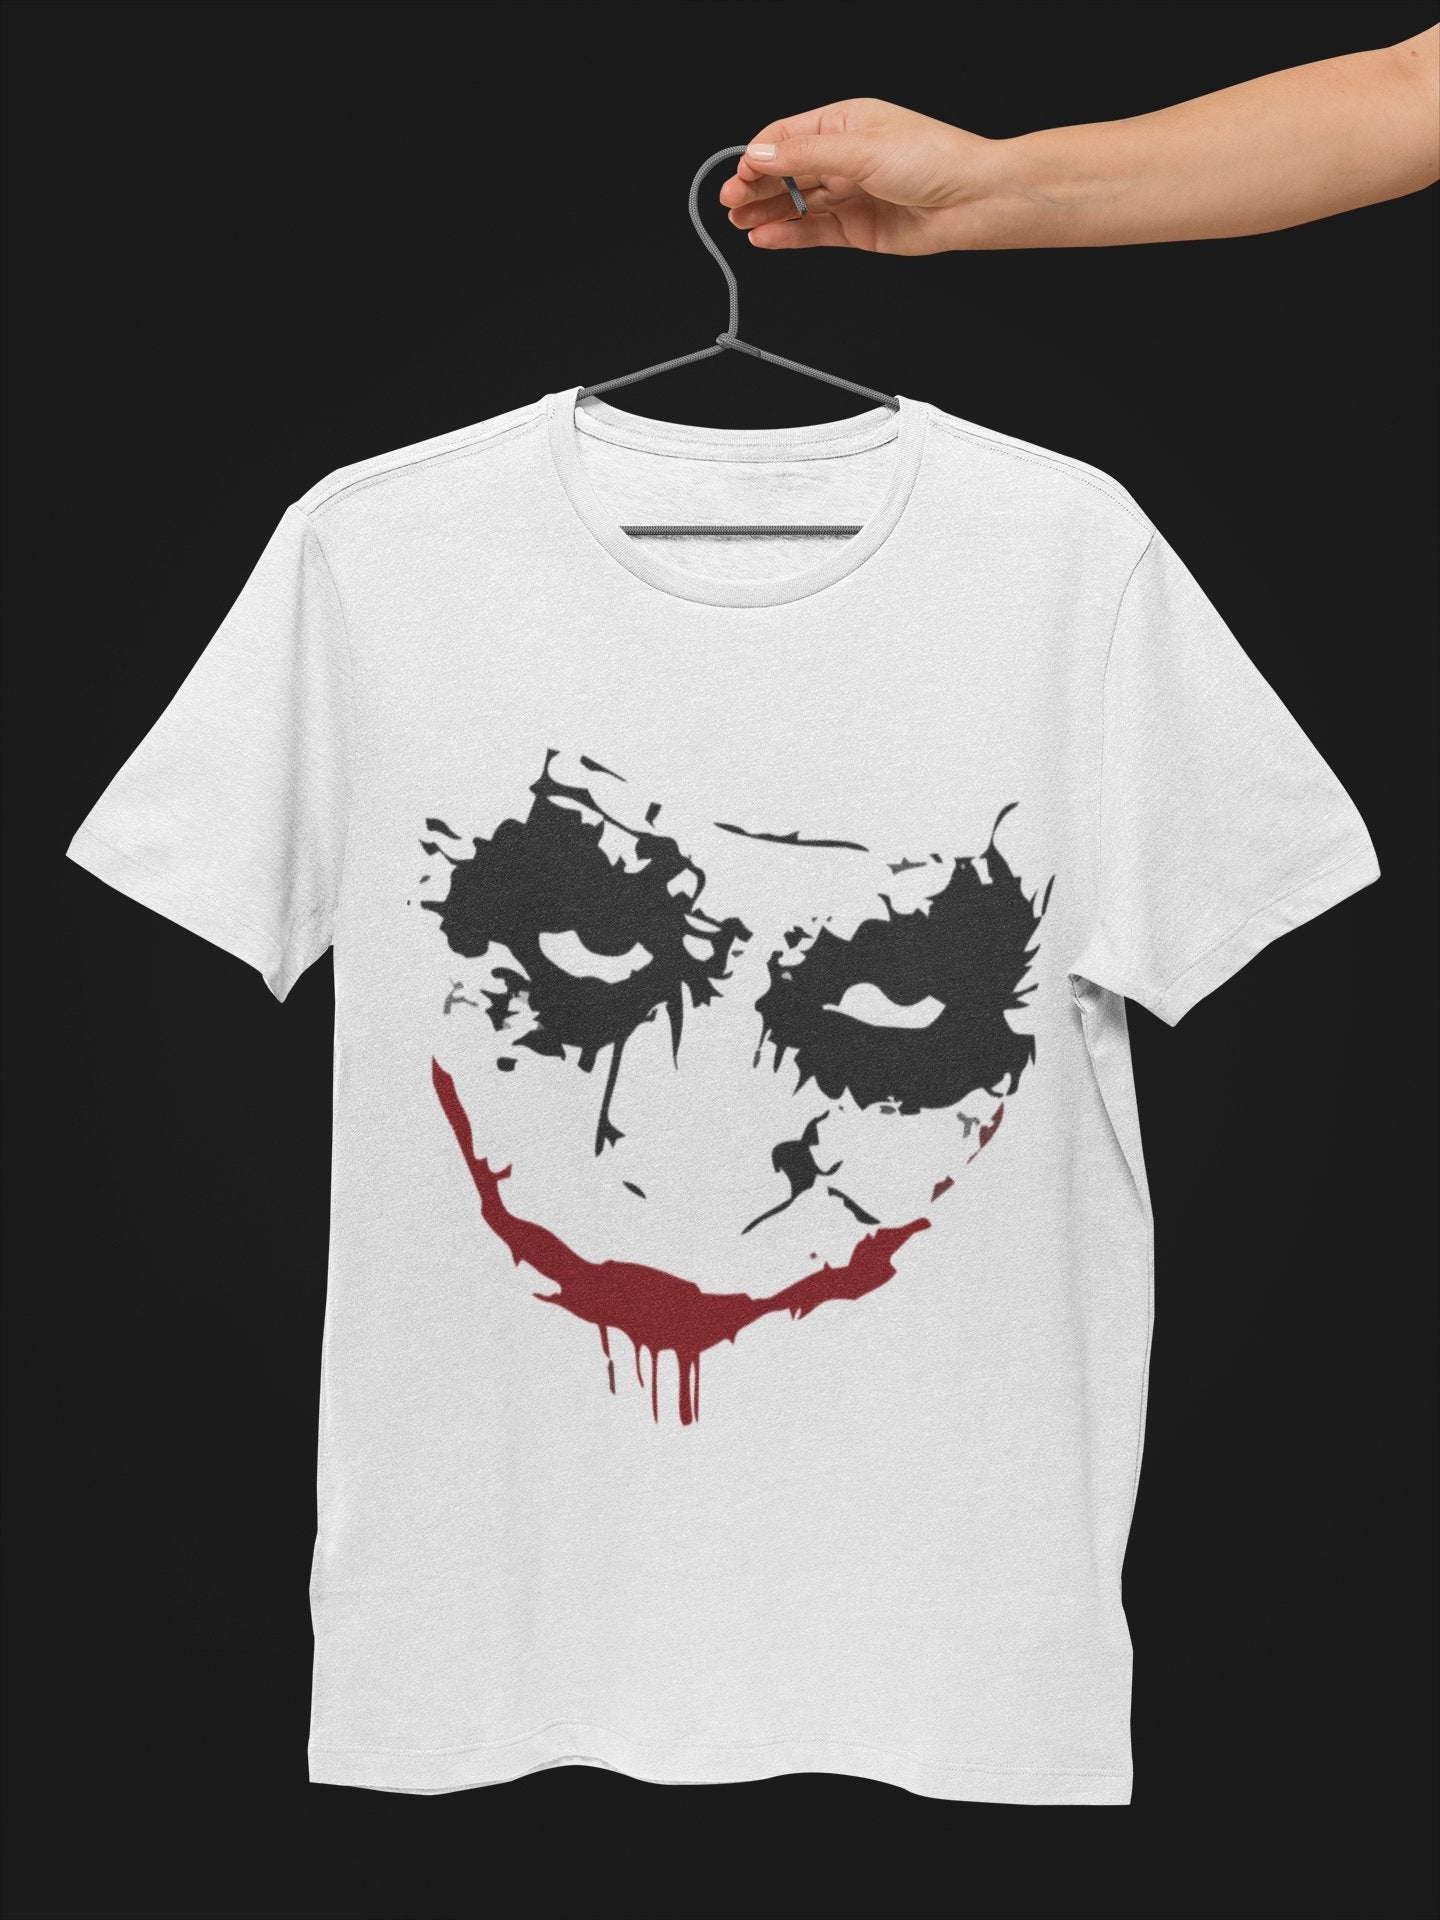 Smiley Face Heath ledger T shirt - Insane Tees